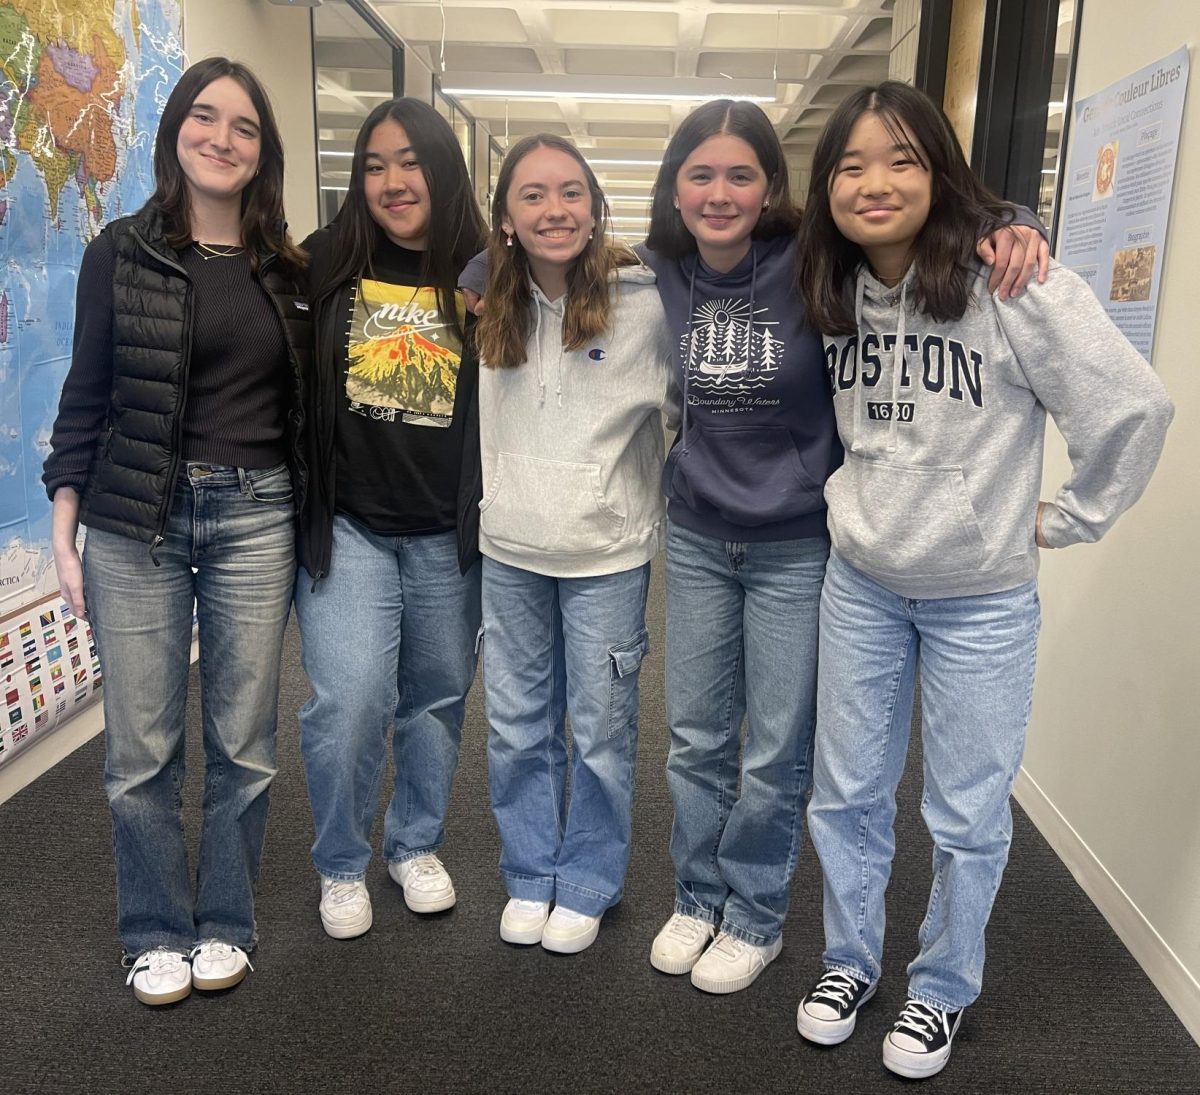 JOINED BY JEANS. Juniors Ada LaTarte, Sophia Bietz, Ava Schluender, Cassandra Overholt, and Scarlett Gibson (left to right) wear matching jeans to celebrate Denim Day. 